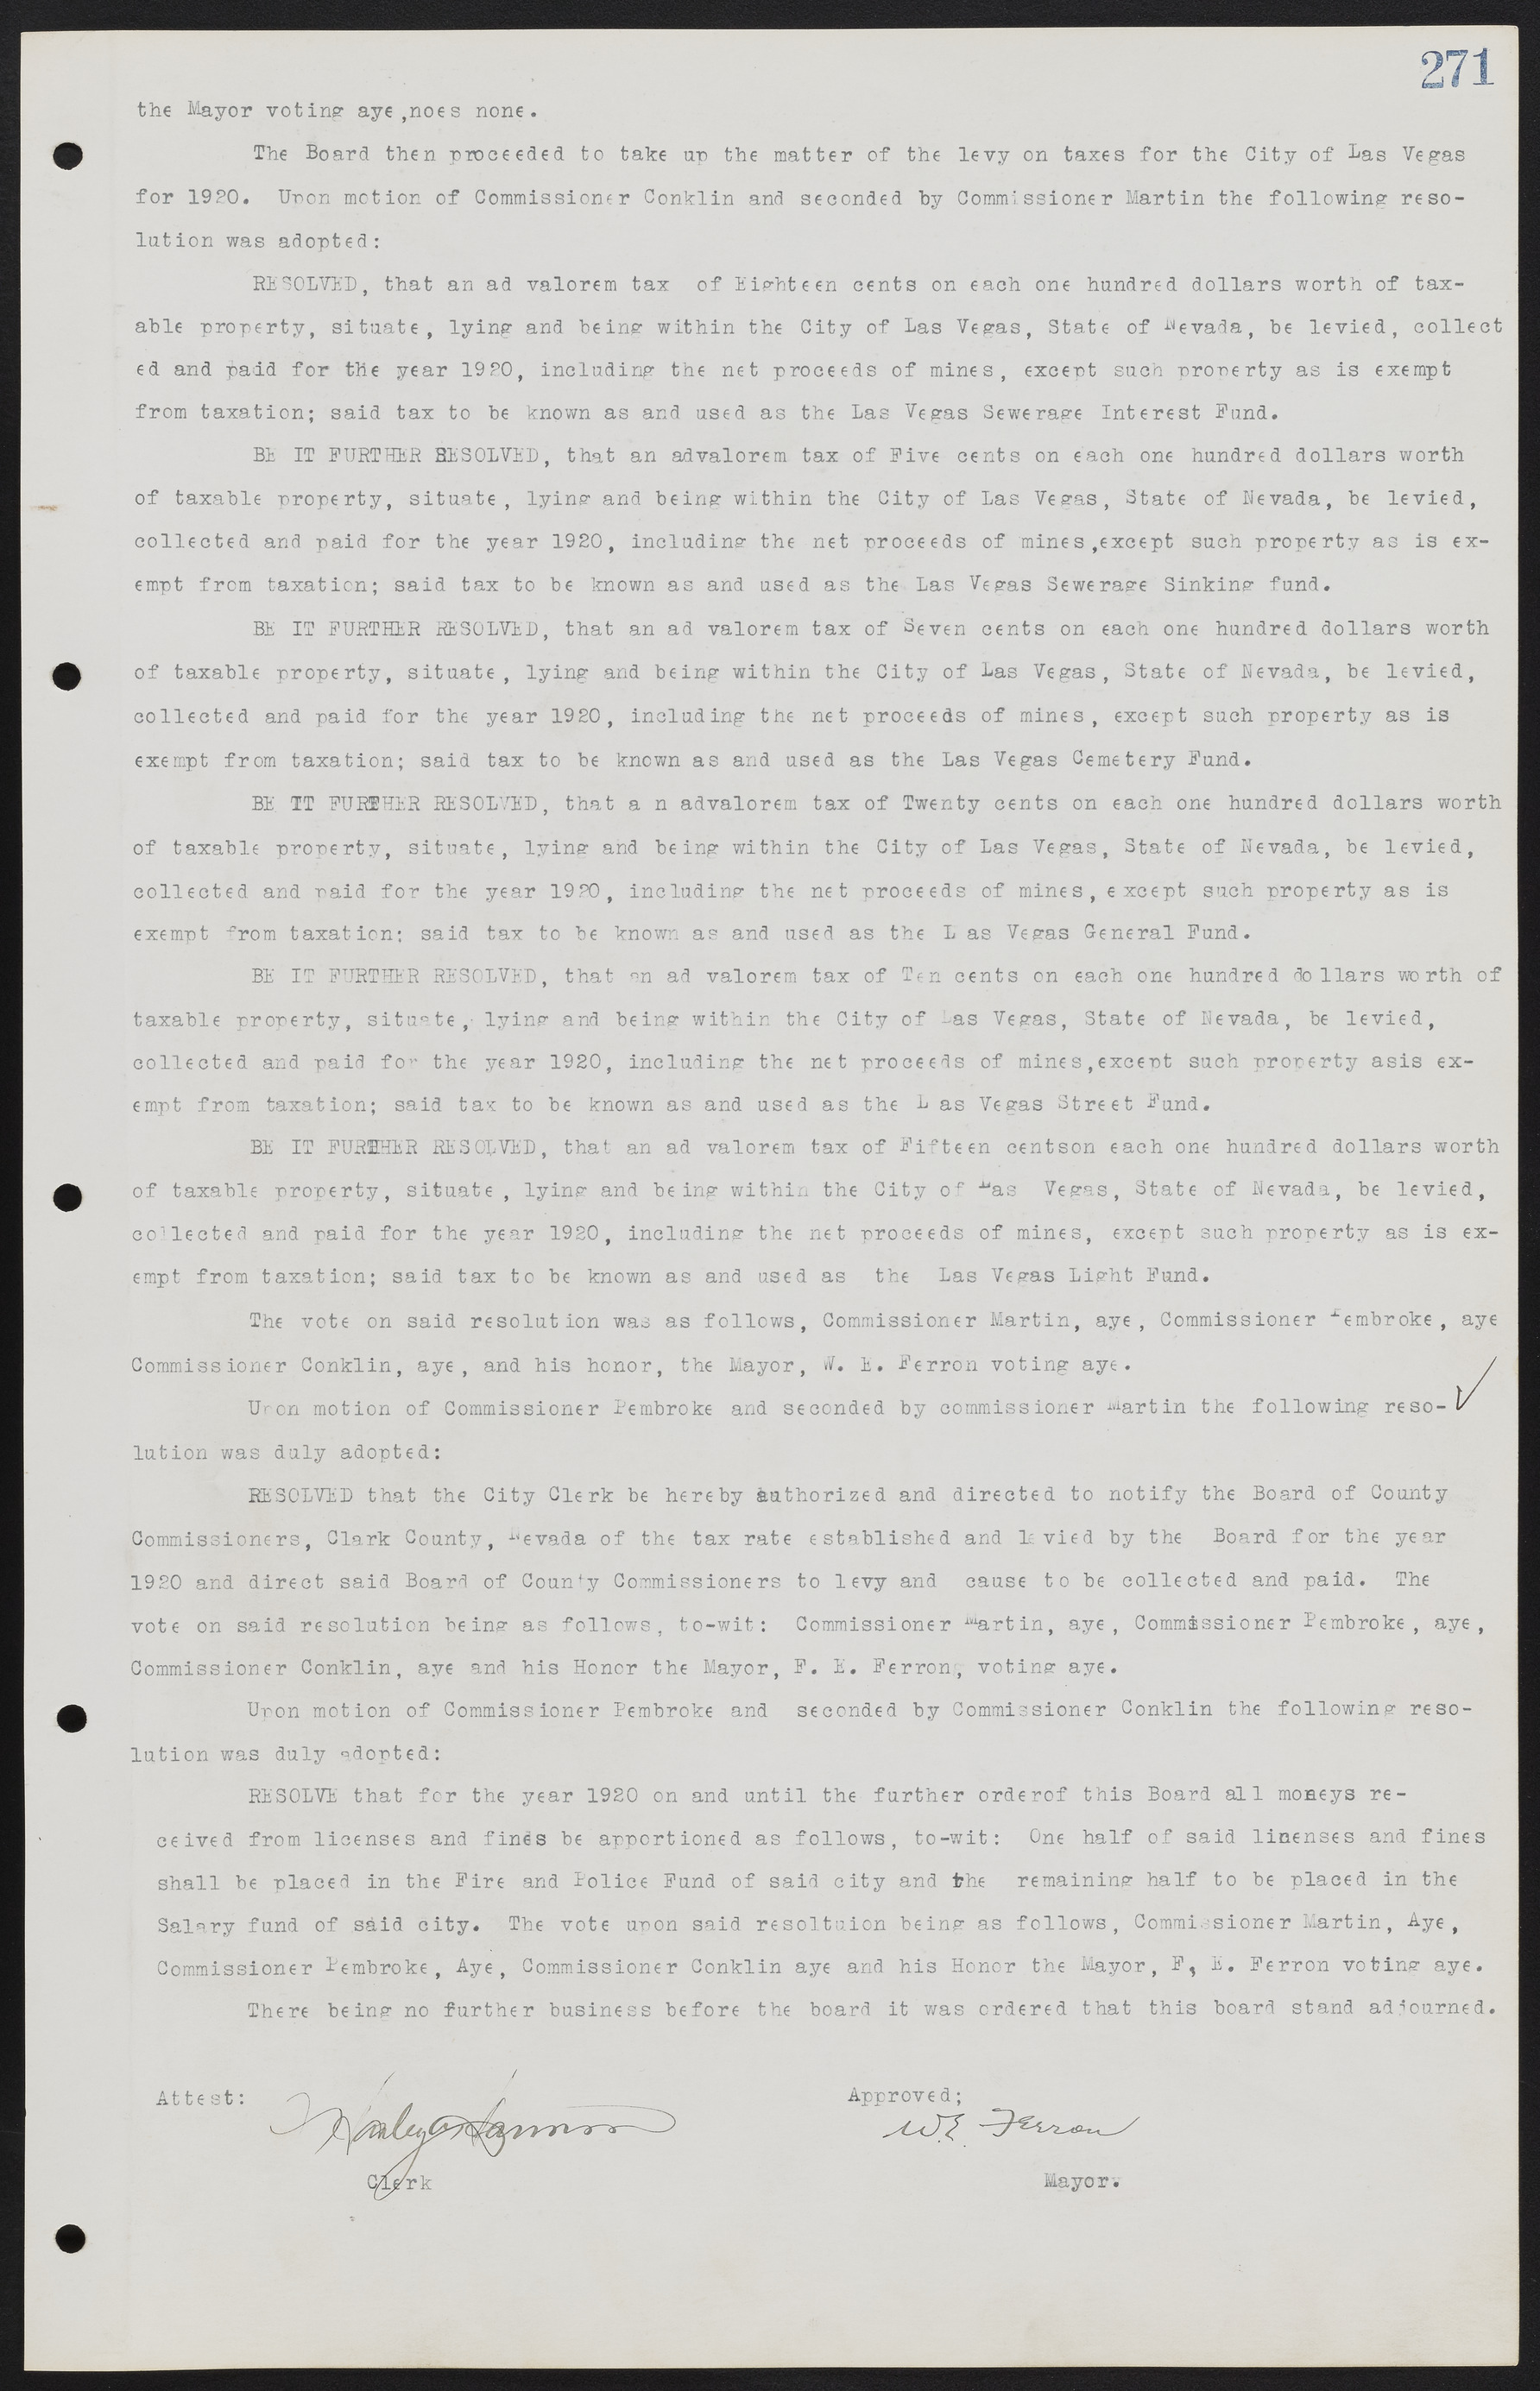 Las Vegas City Commission Minutes, June 22, 1911 to February 7, 1922, lvc000001-287